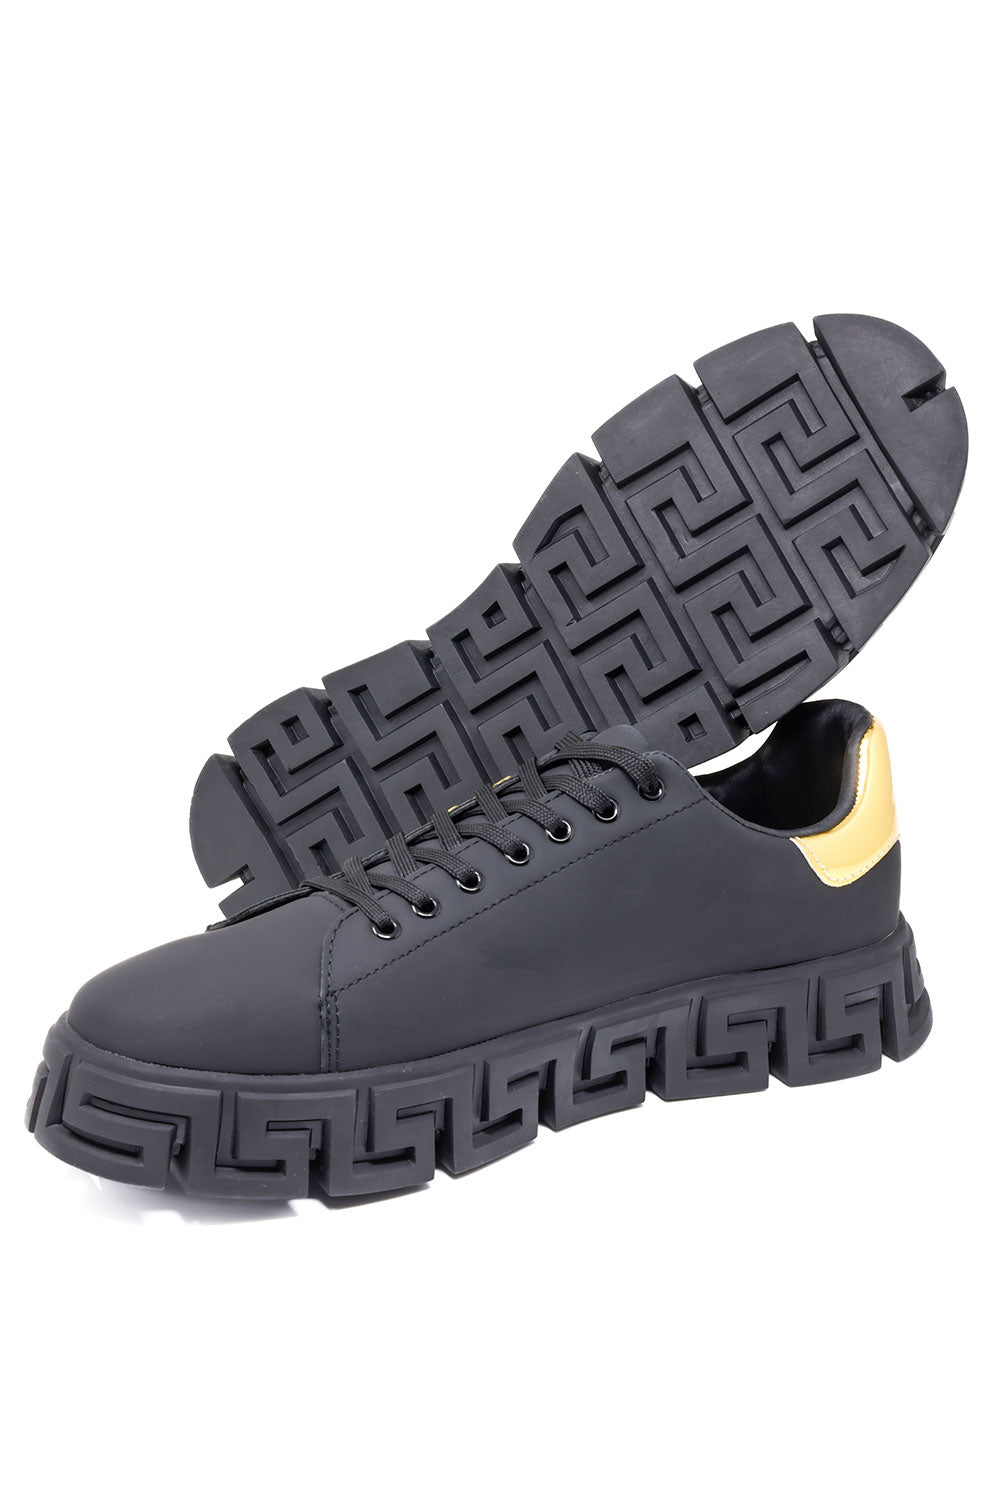 Barabas Men's Greek Key Sole Pattern Premium Sneakers 4SK07 Black